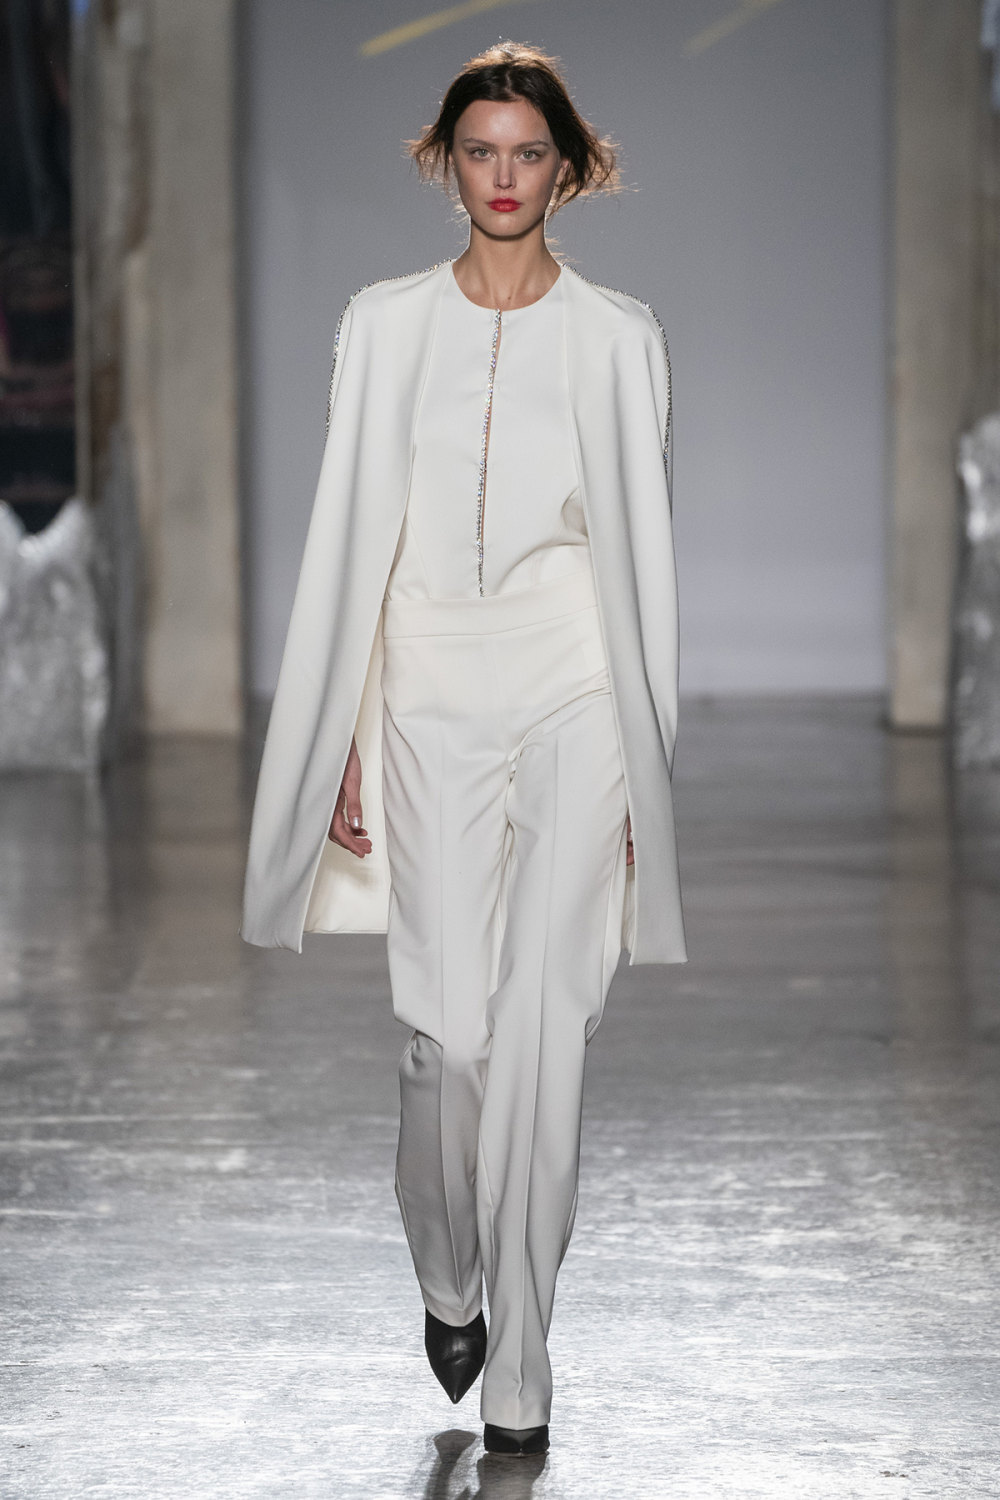 Genny时装系列将黑豹印花混合在一起搭配宽松梦幻般的白色礼服-11.jpg